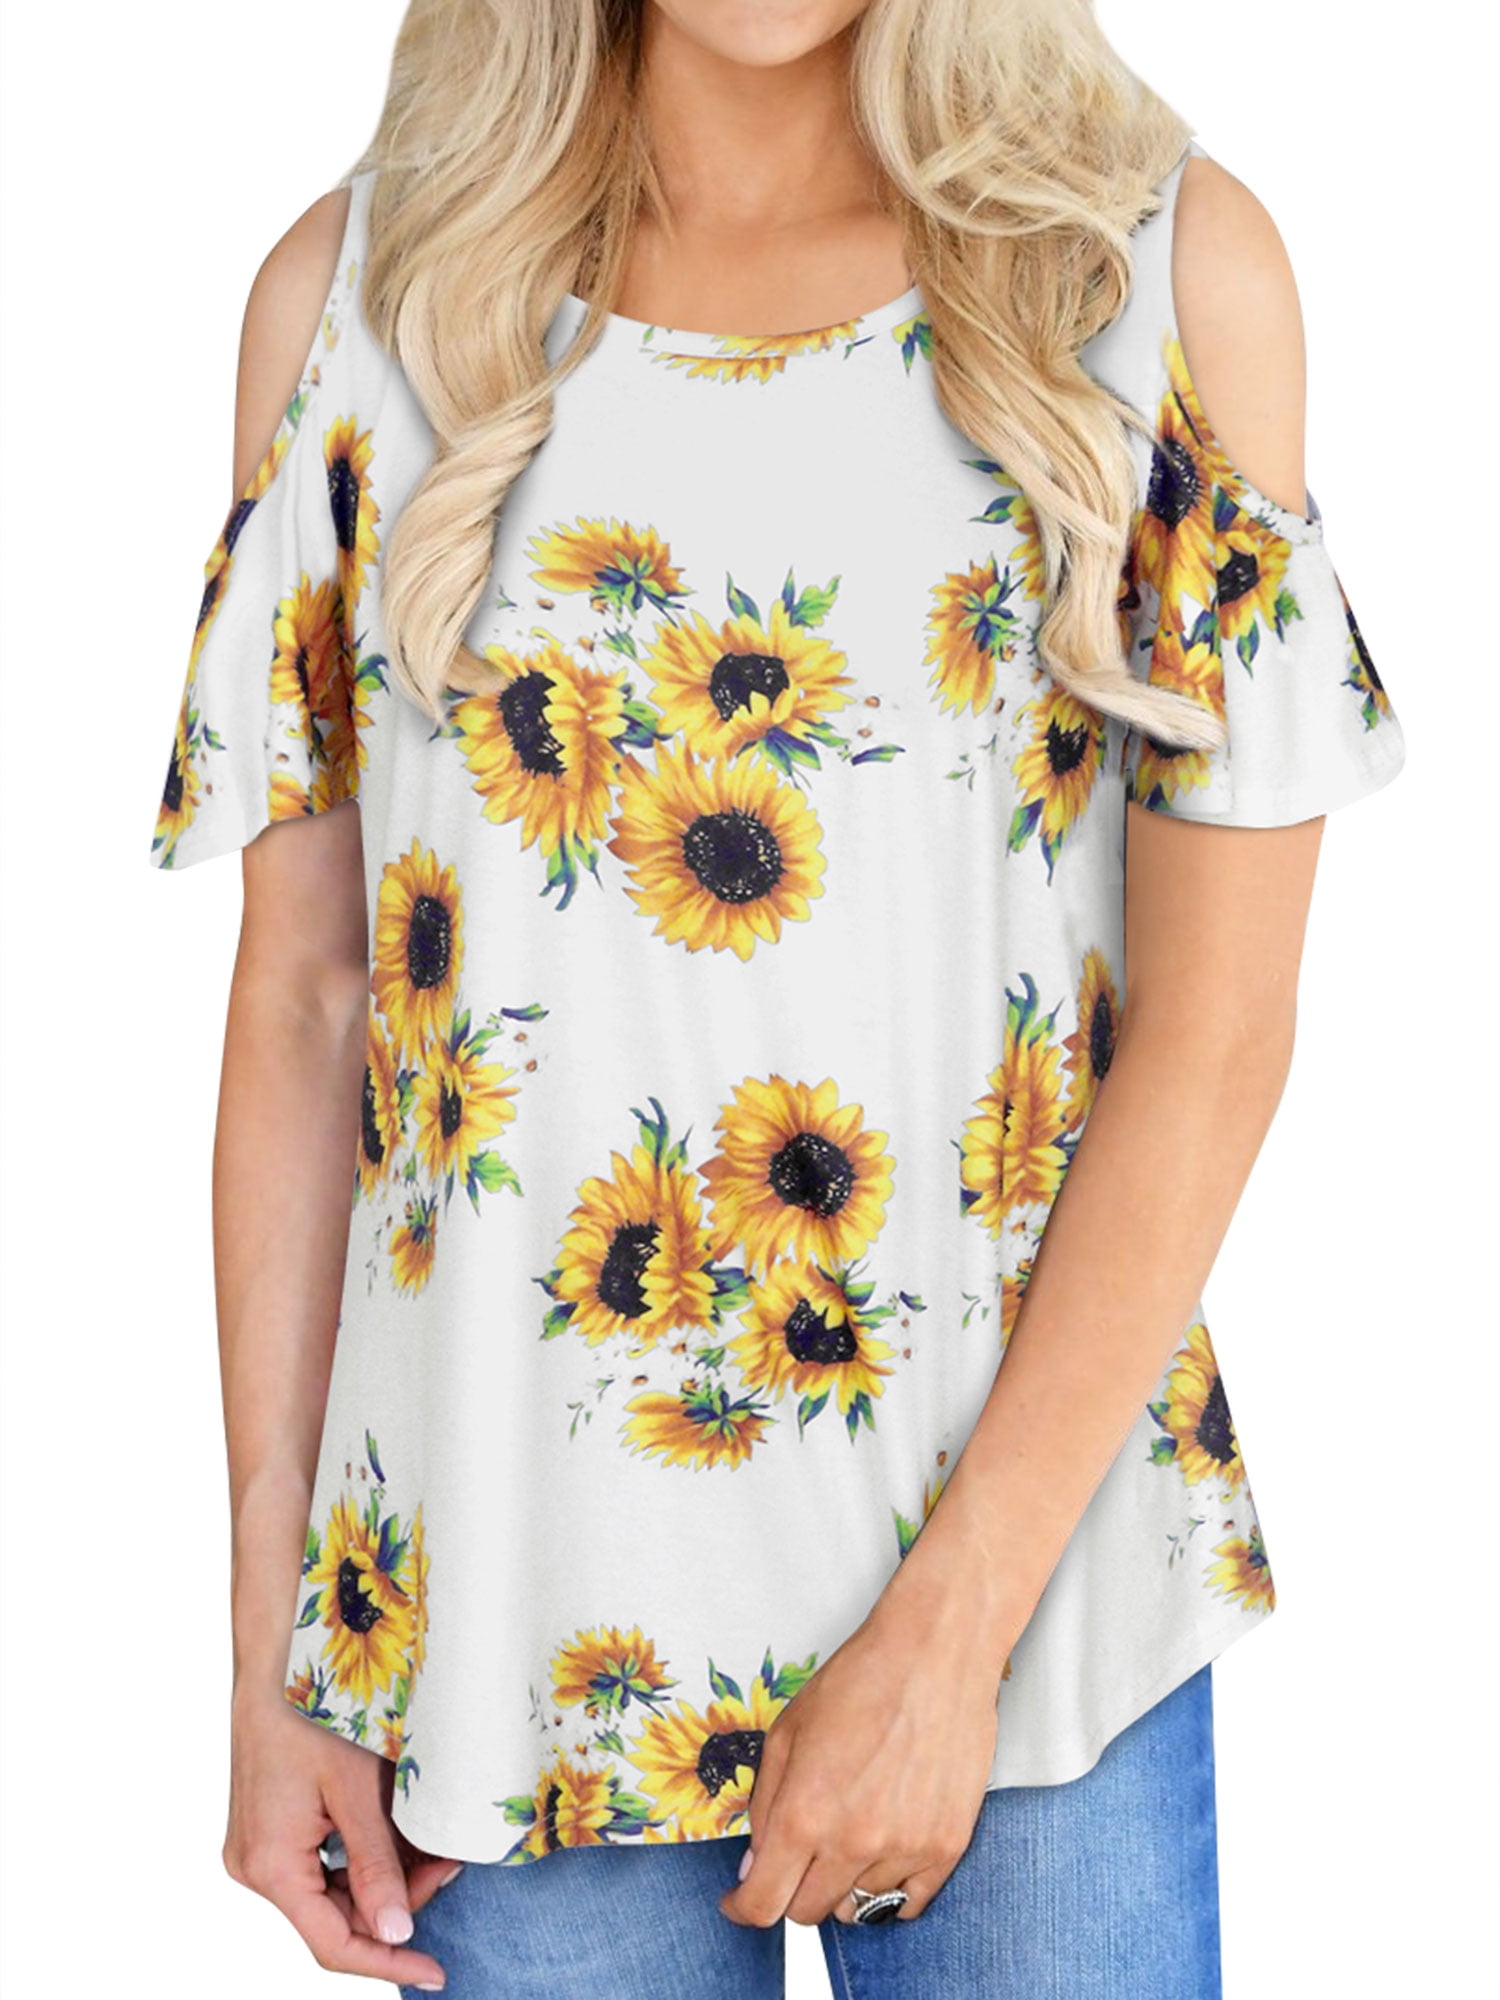 IFOUNDYOU 2020 NewWomen Summer Cat Sunflower Printed Short Sleeve T-Shirt Casual Loose Top Tunics 